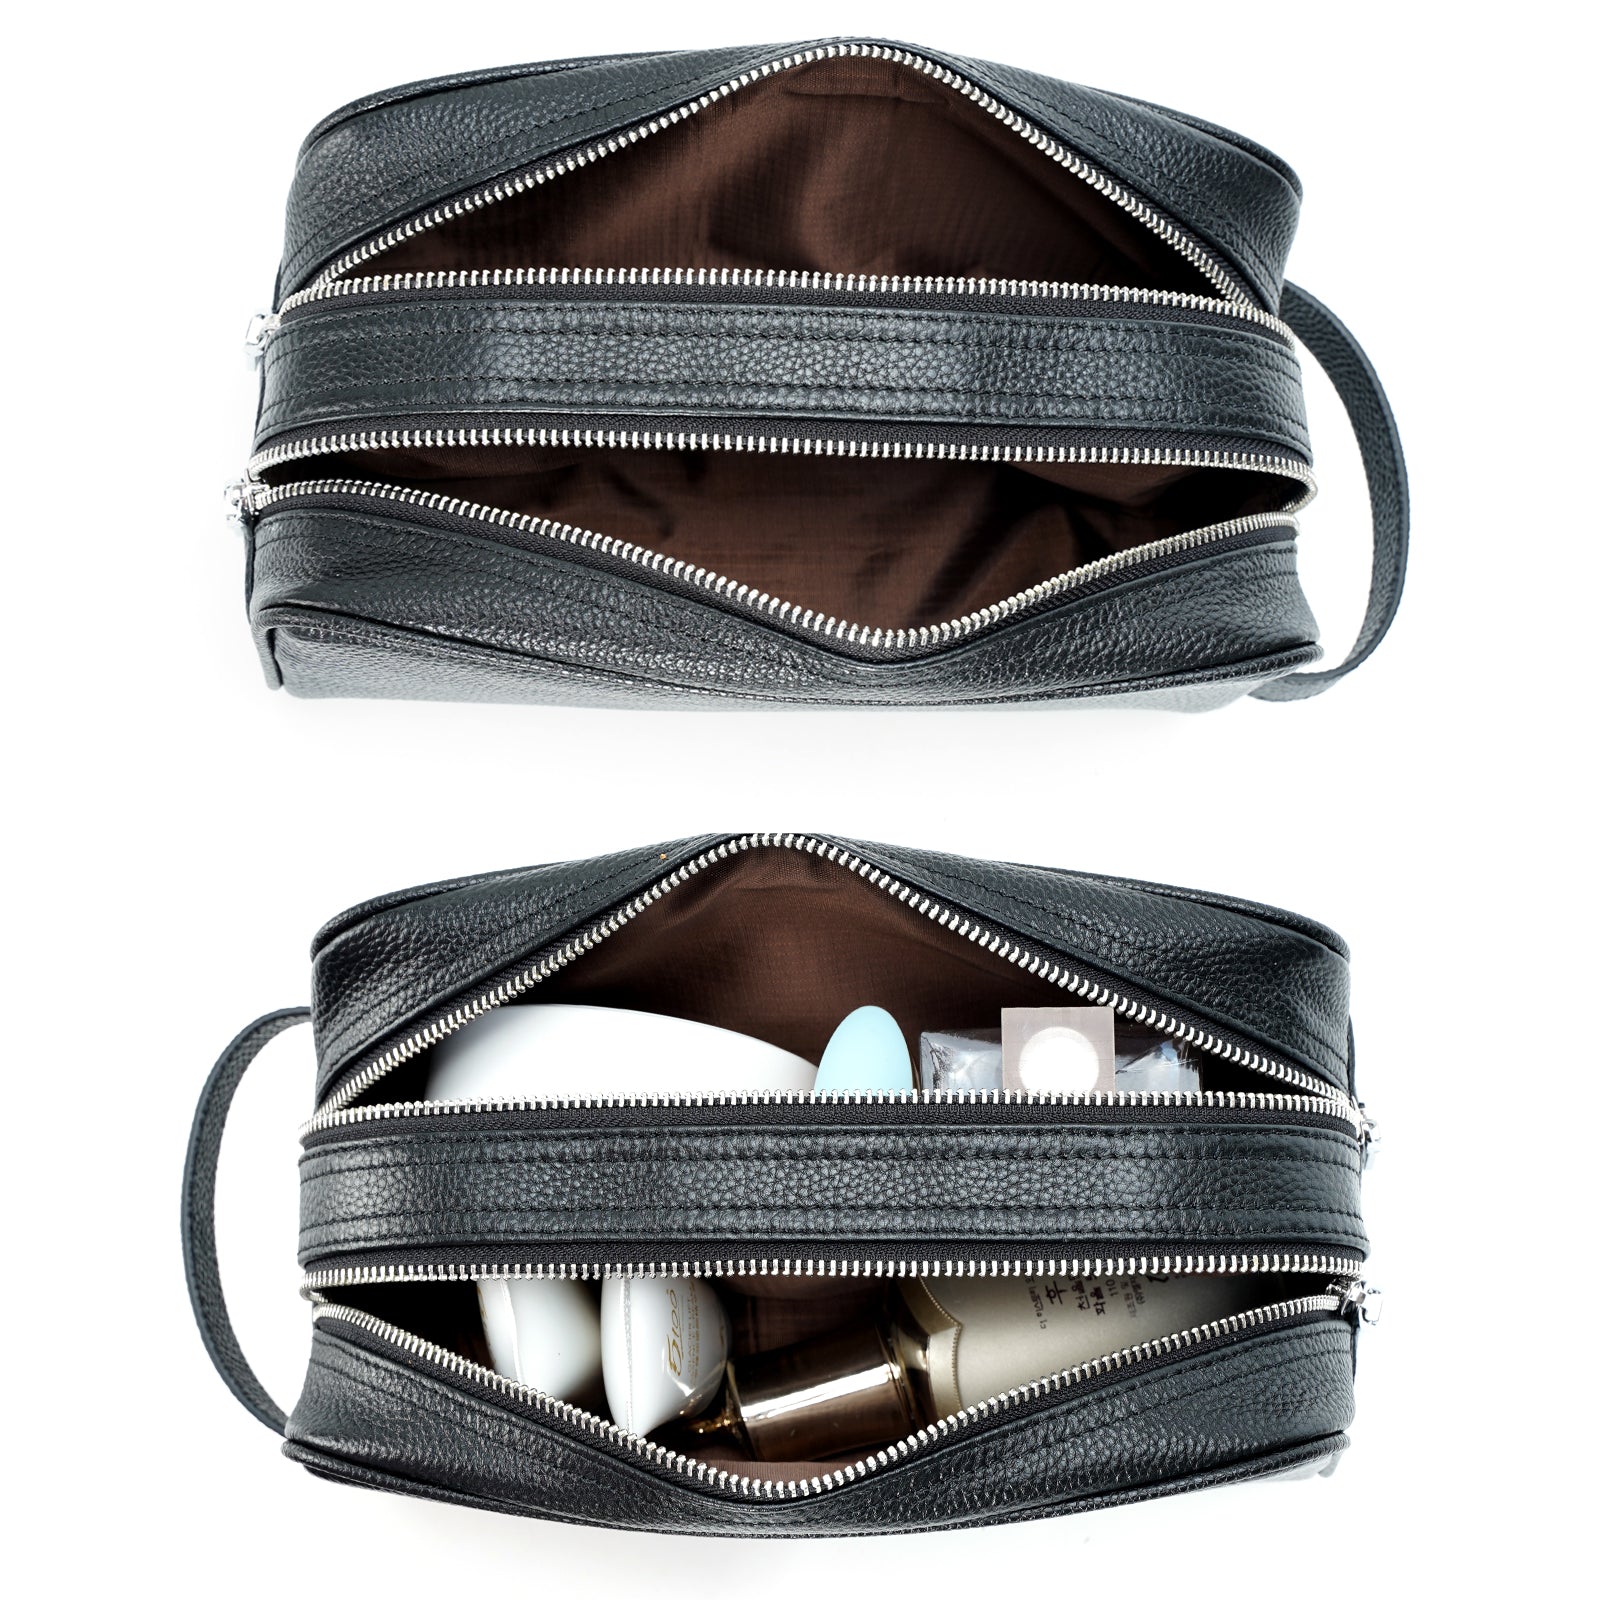 Polare Cowhide Leather Water Resistant Dopp Kit Shaving Travel Case Toiletry Bag (Inside)